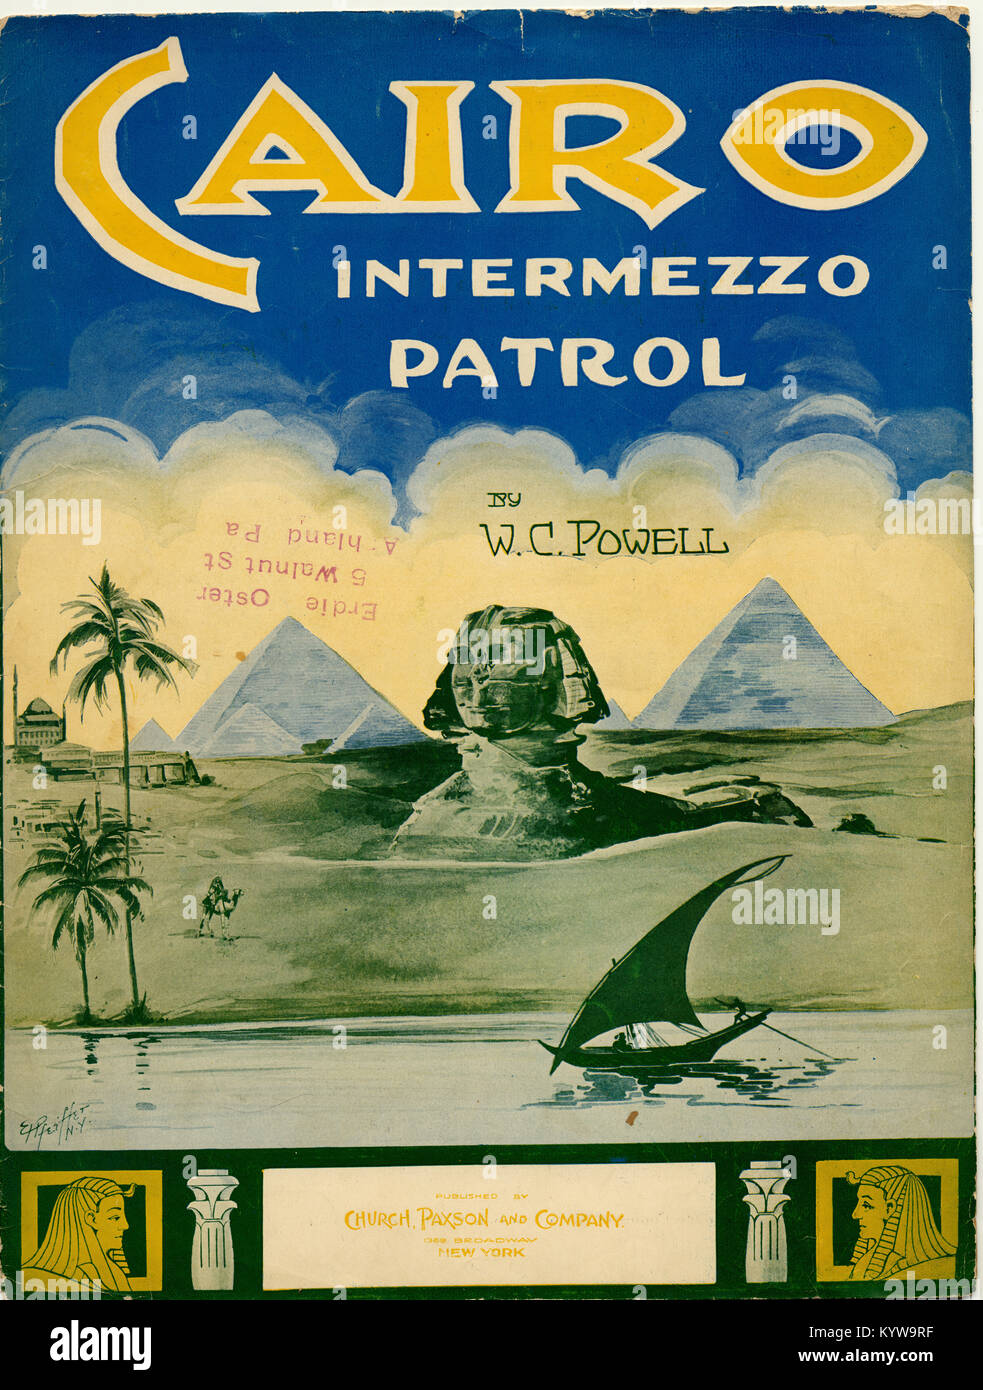 Cairo Intermezzo Patrol Stock Photo